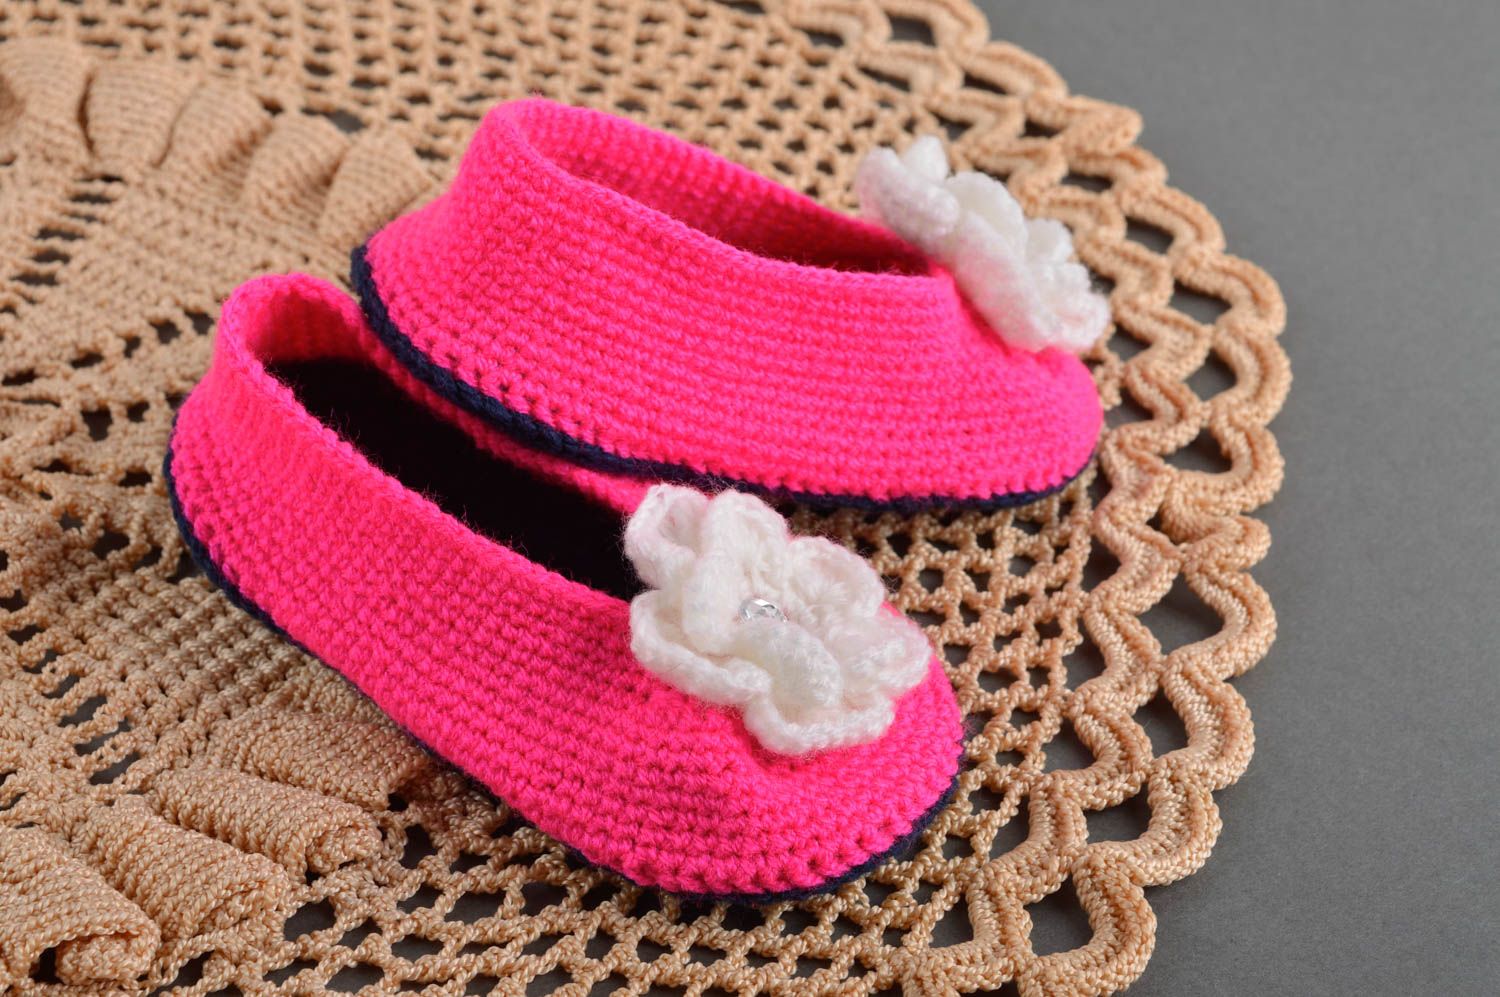 Handmade crocheted pink slippers unusual warm footwear home slippers for kids photo 1